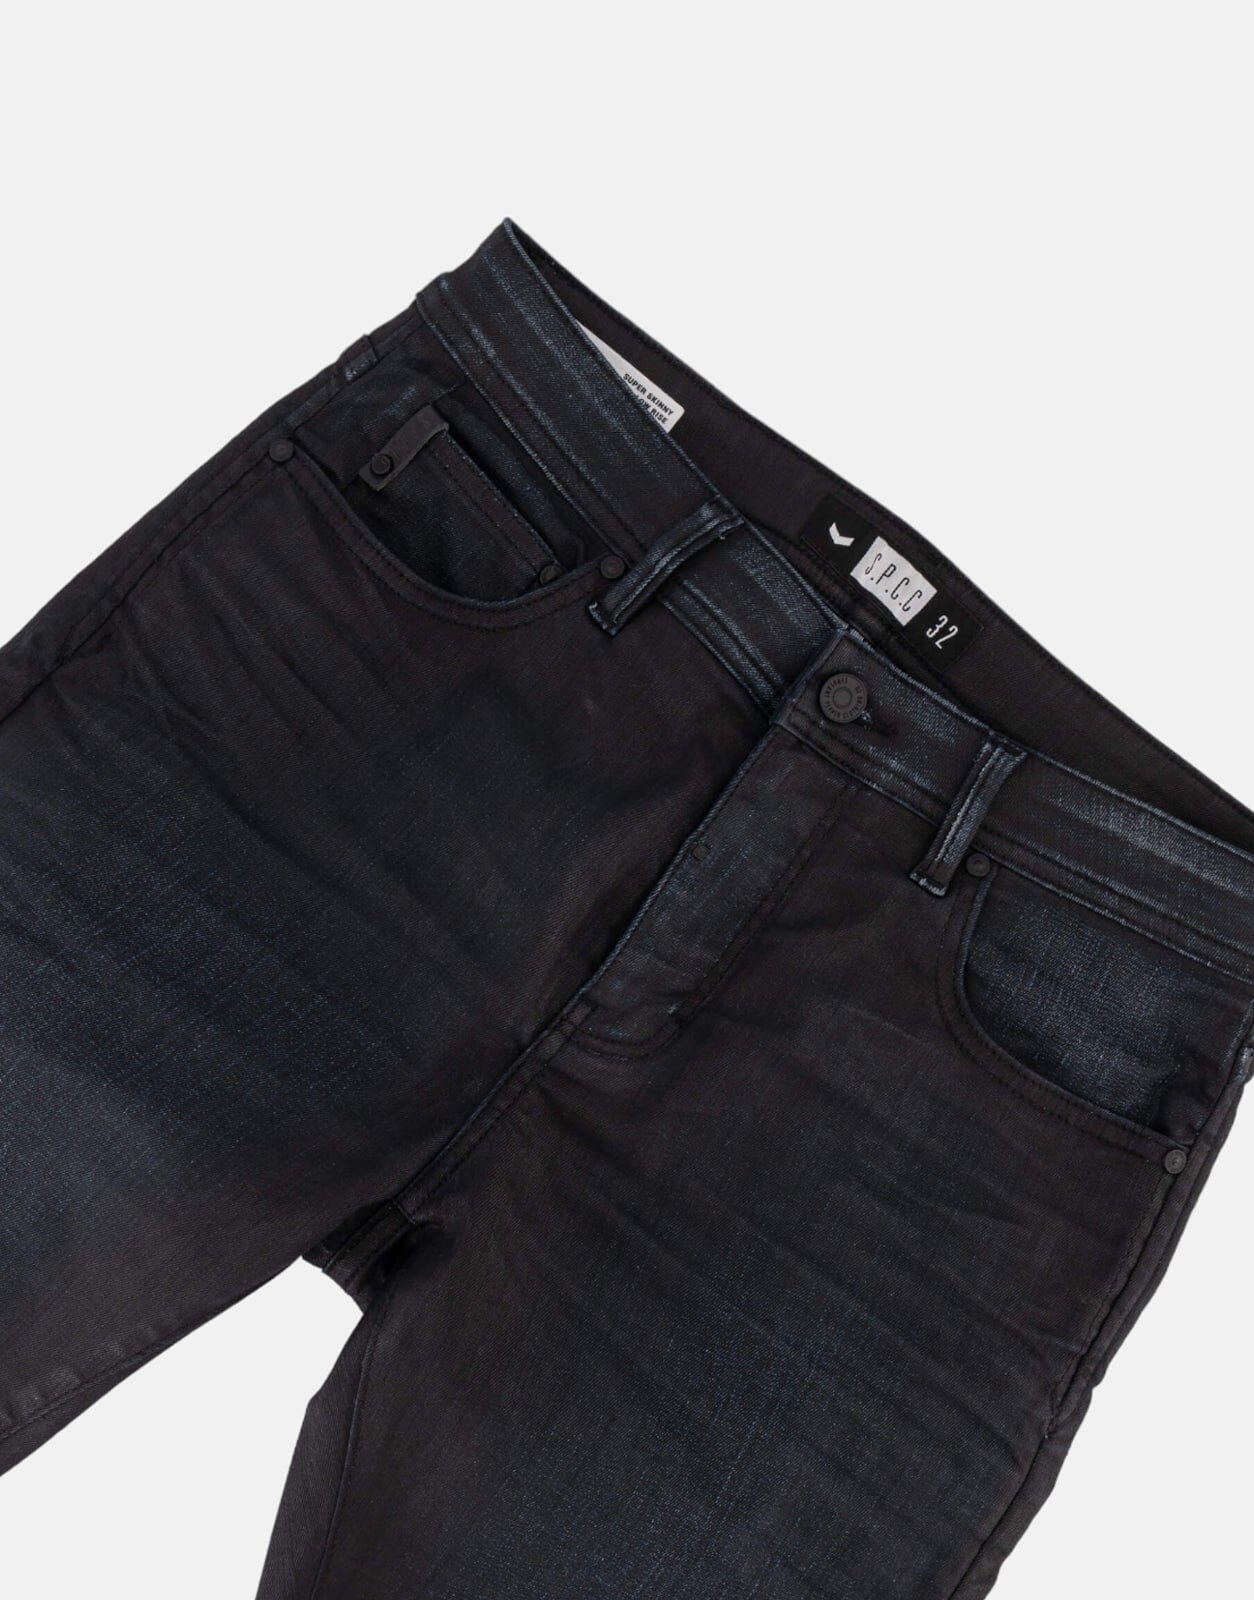 SPCC Hydris Black Jeans - Subwear